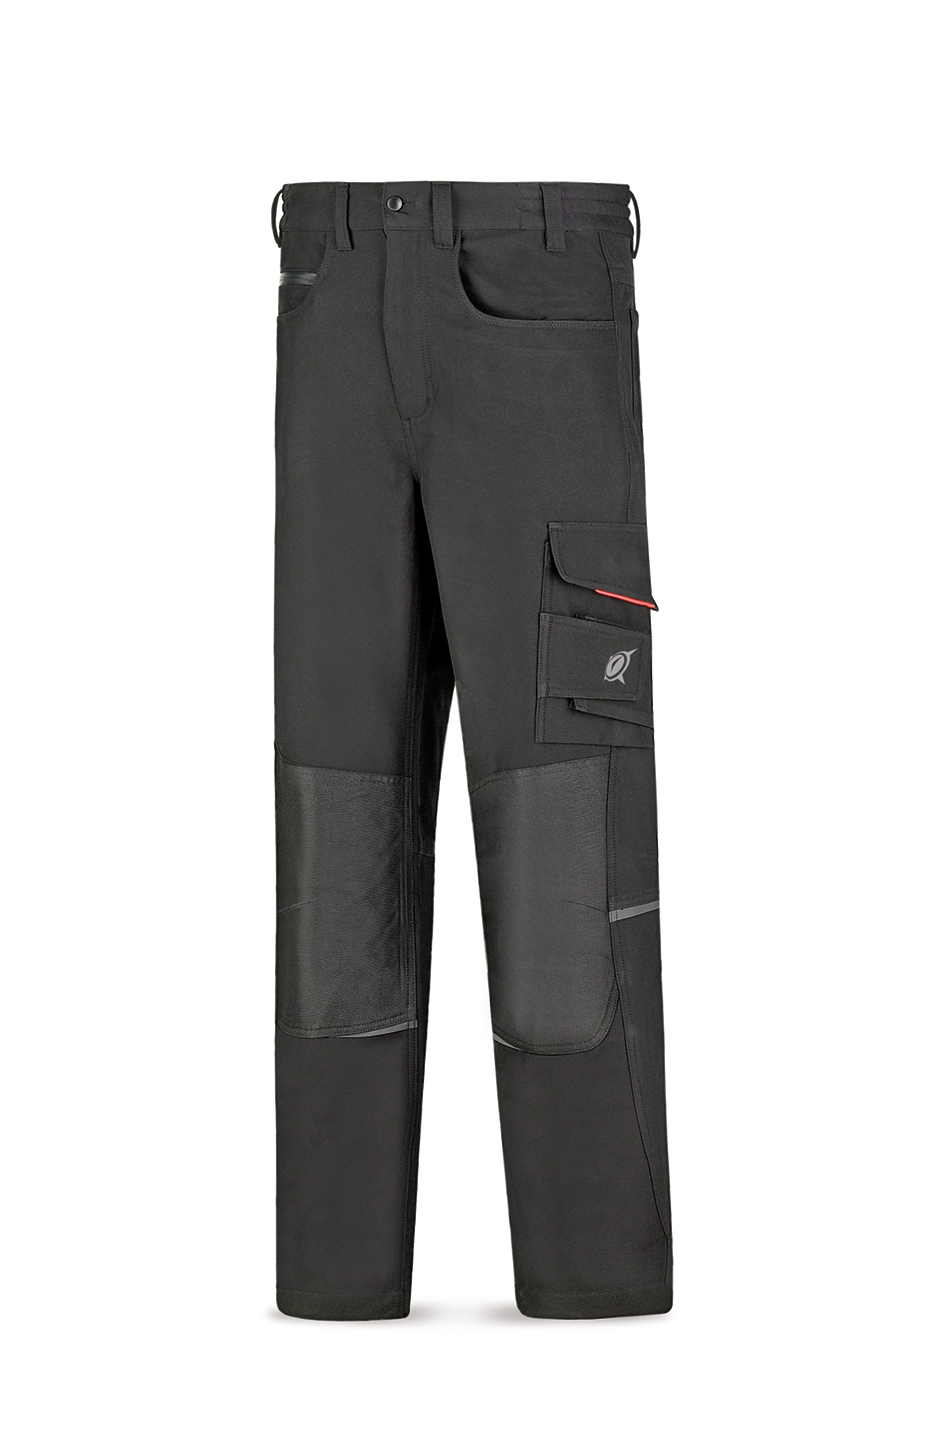 288-PAS3 Abrigo y lluvia Pantalones Pantalón Softshell triple lámina modelo NJORD negro 320 gr.